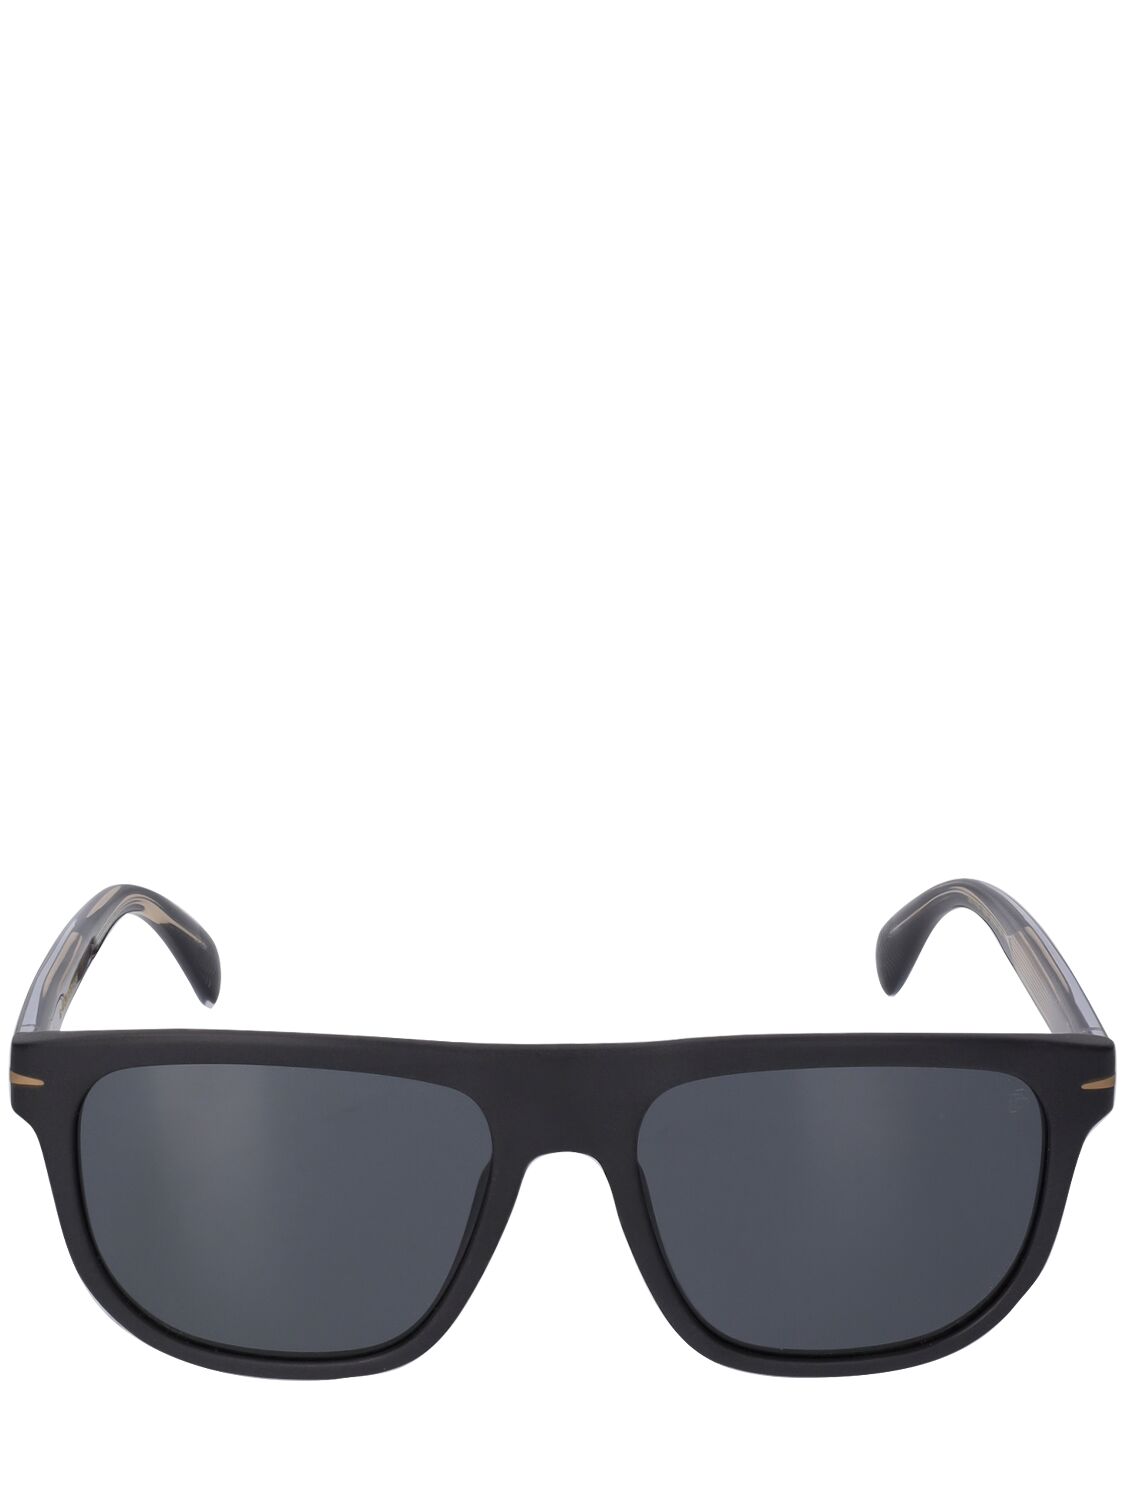 Db Eyewear By David Beckham Db Squared Acetate Sunglasses In Black,grey